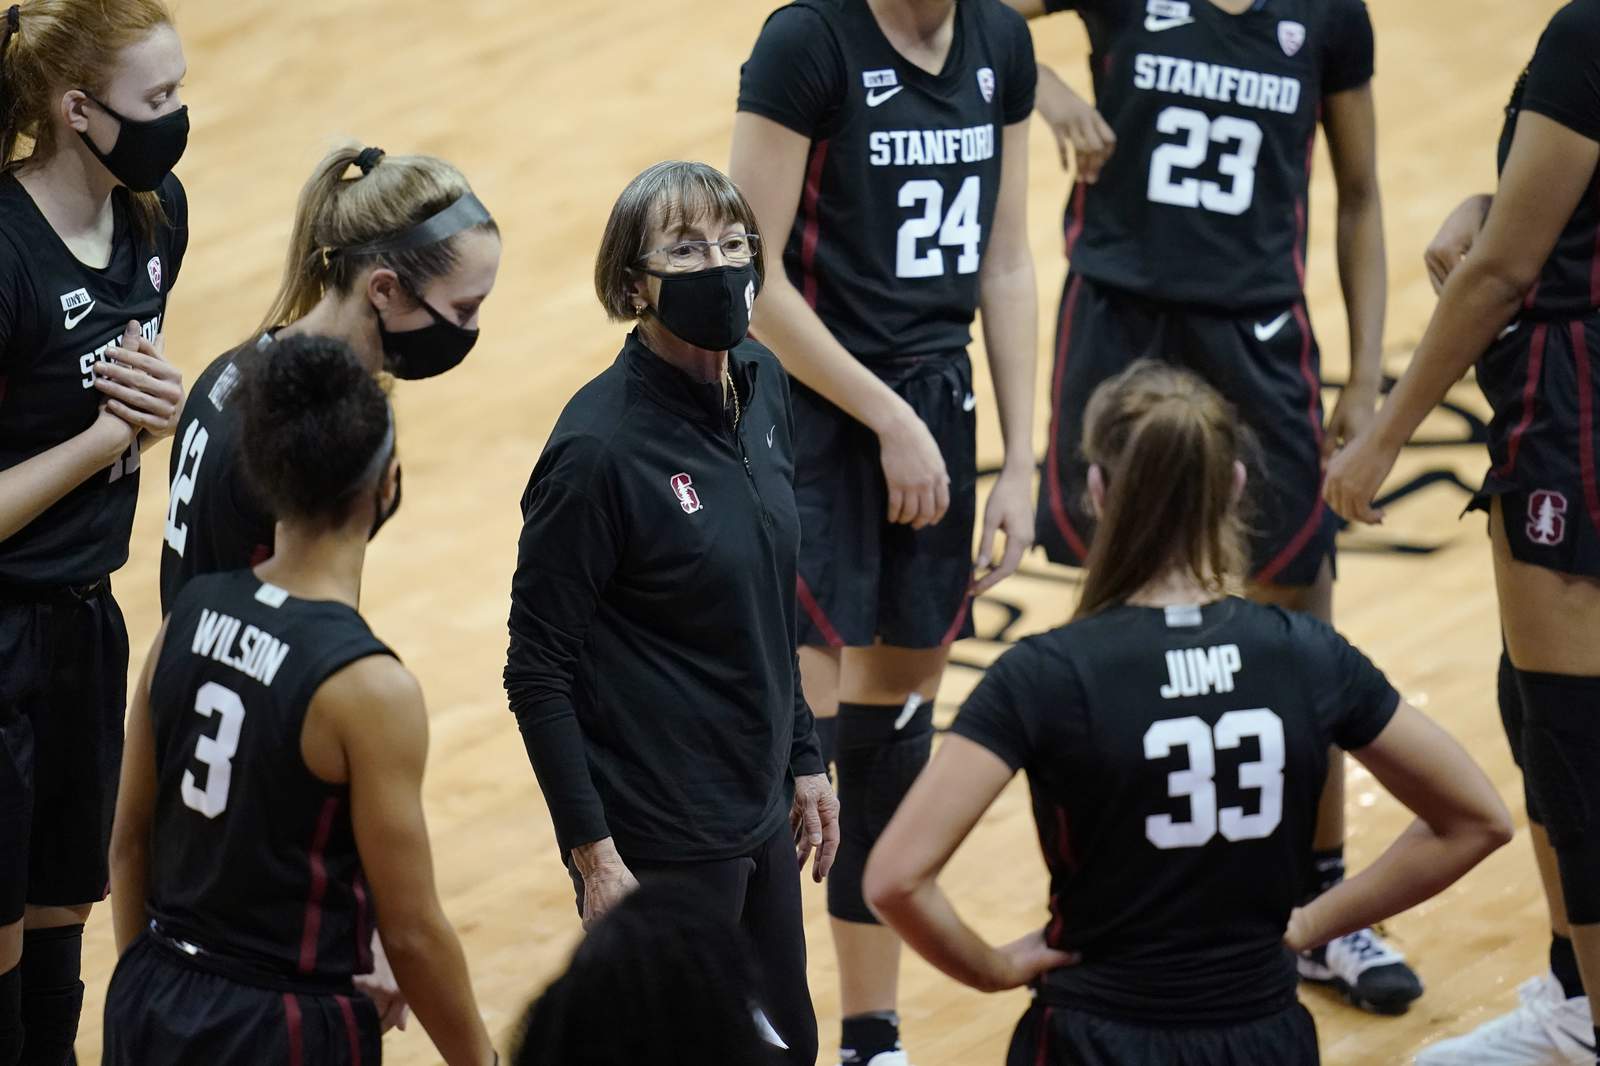 Stanford replaces South Carolina atop women's AP Top 25